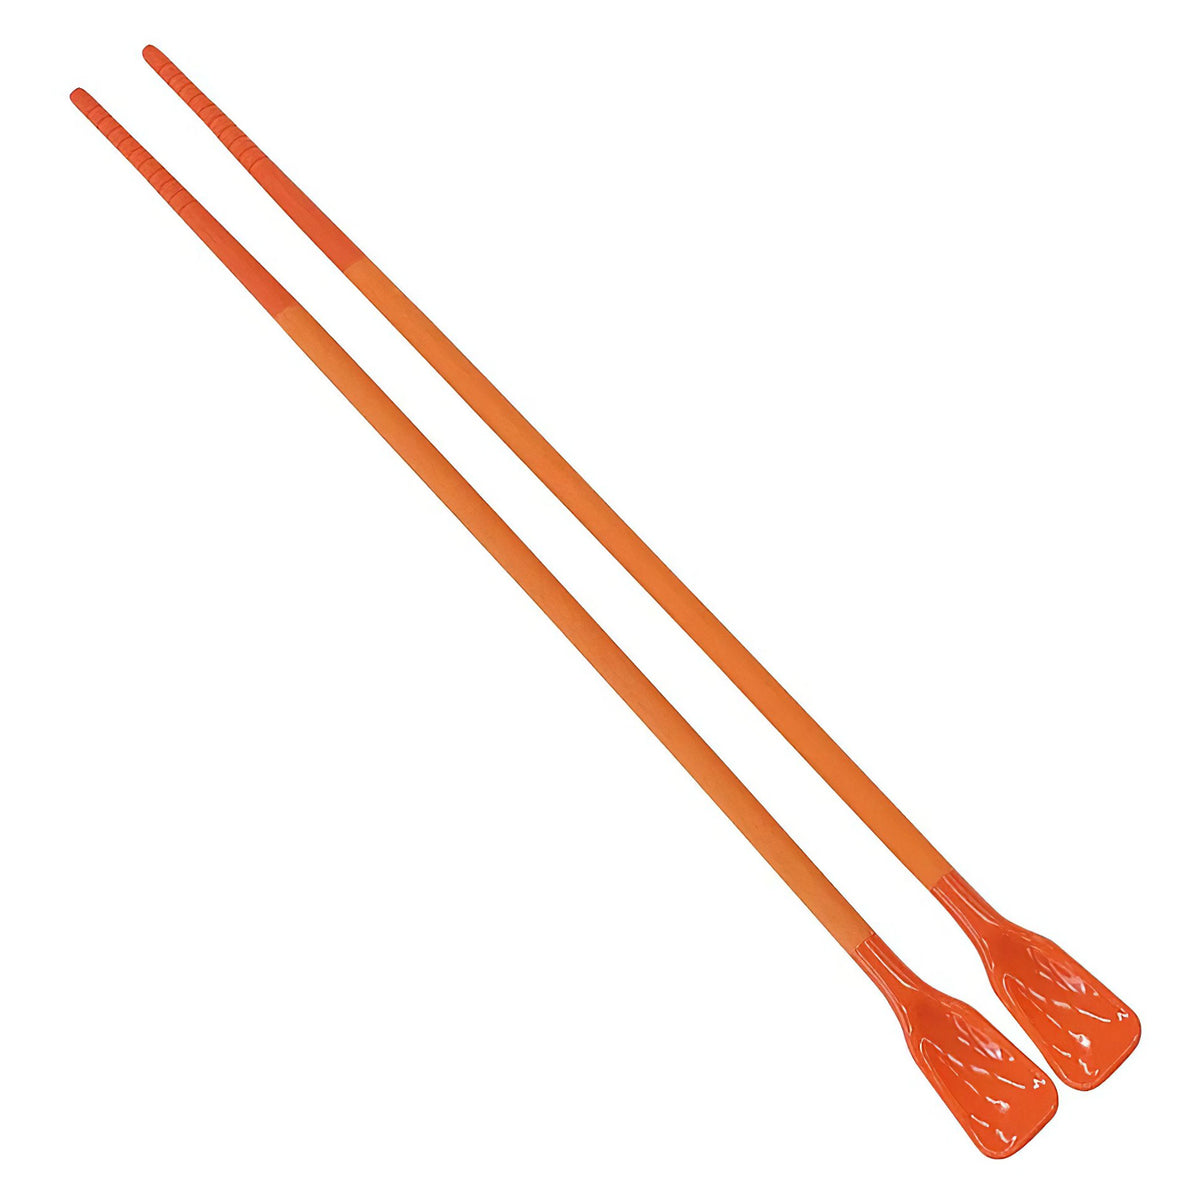 Ooizumi Silicone Cooking Chopsticks